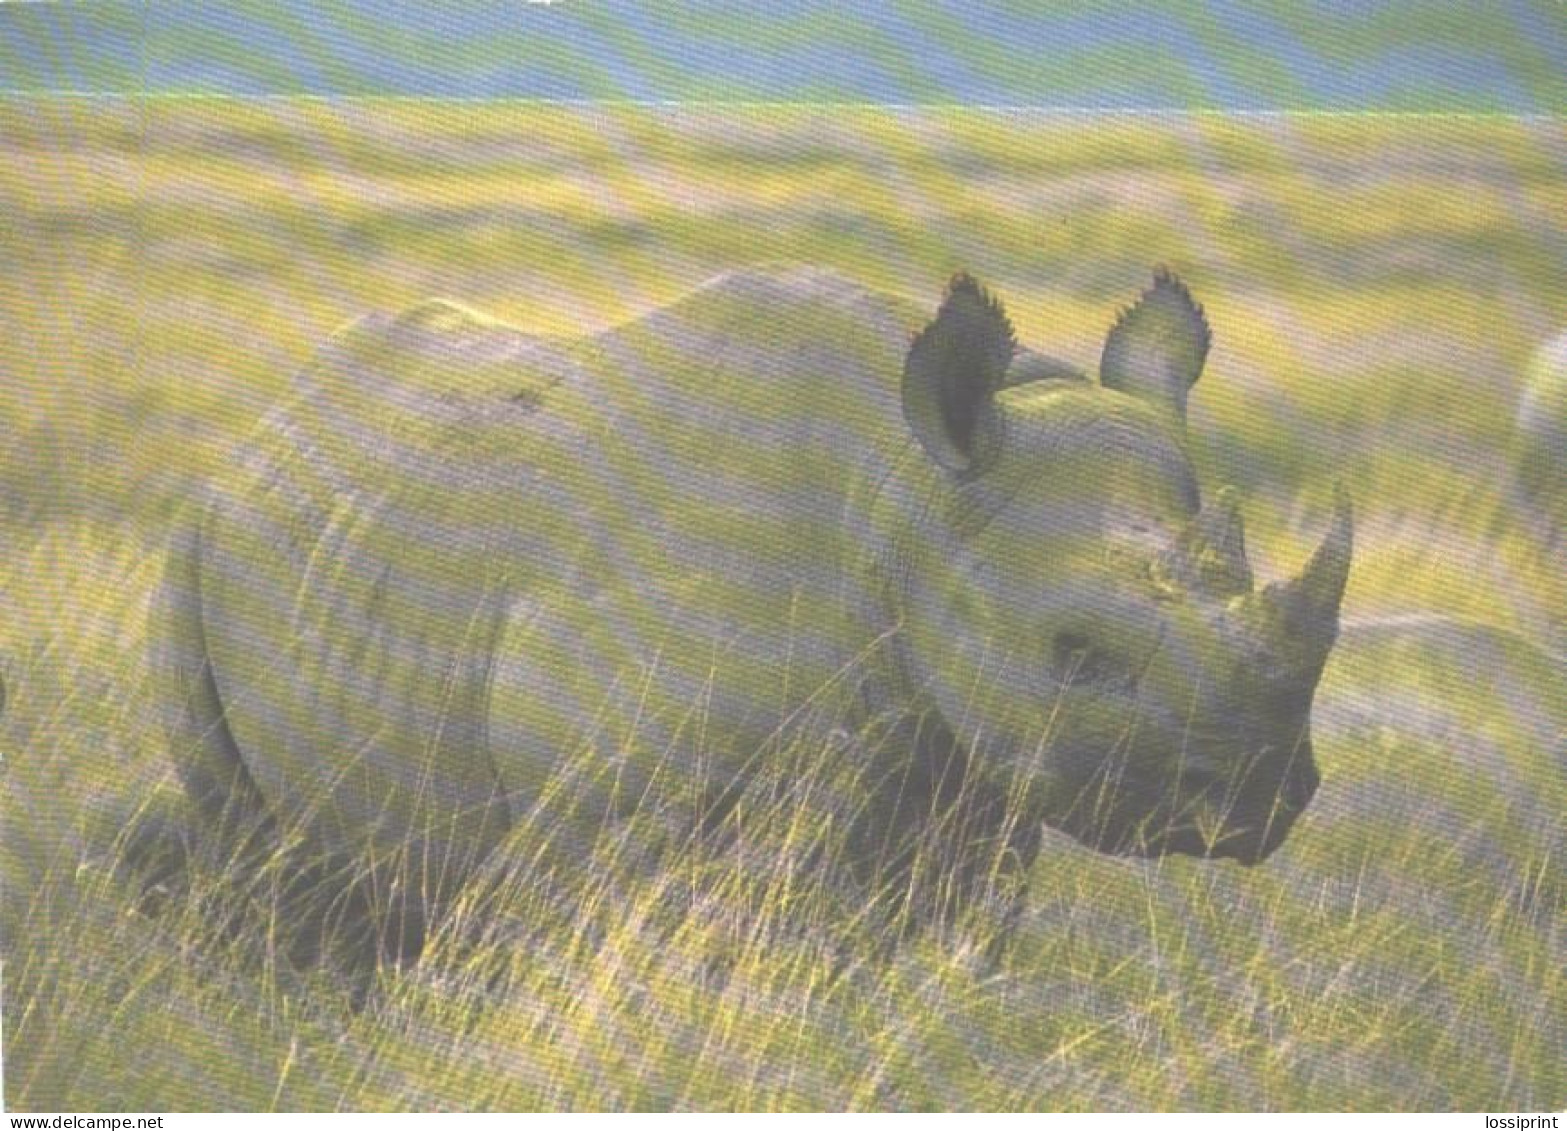 Rhinoceros, Ngorongoro Crater - Rhinoceros